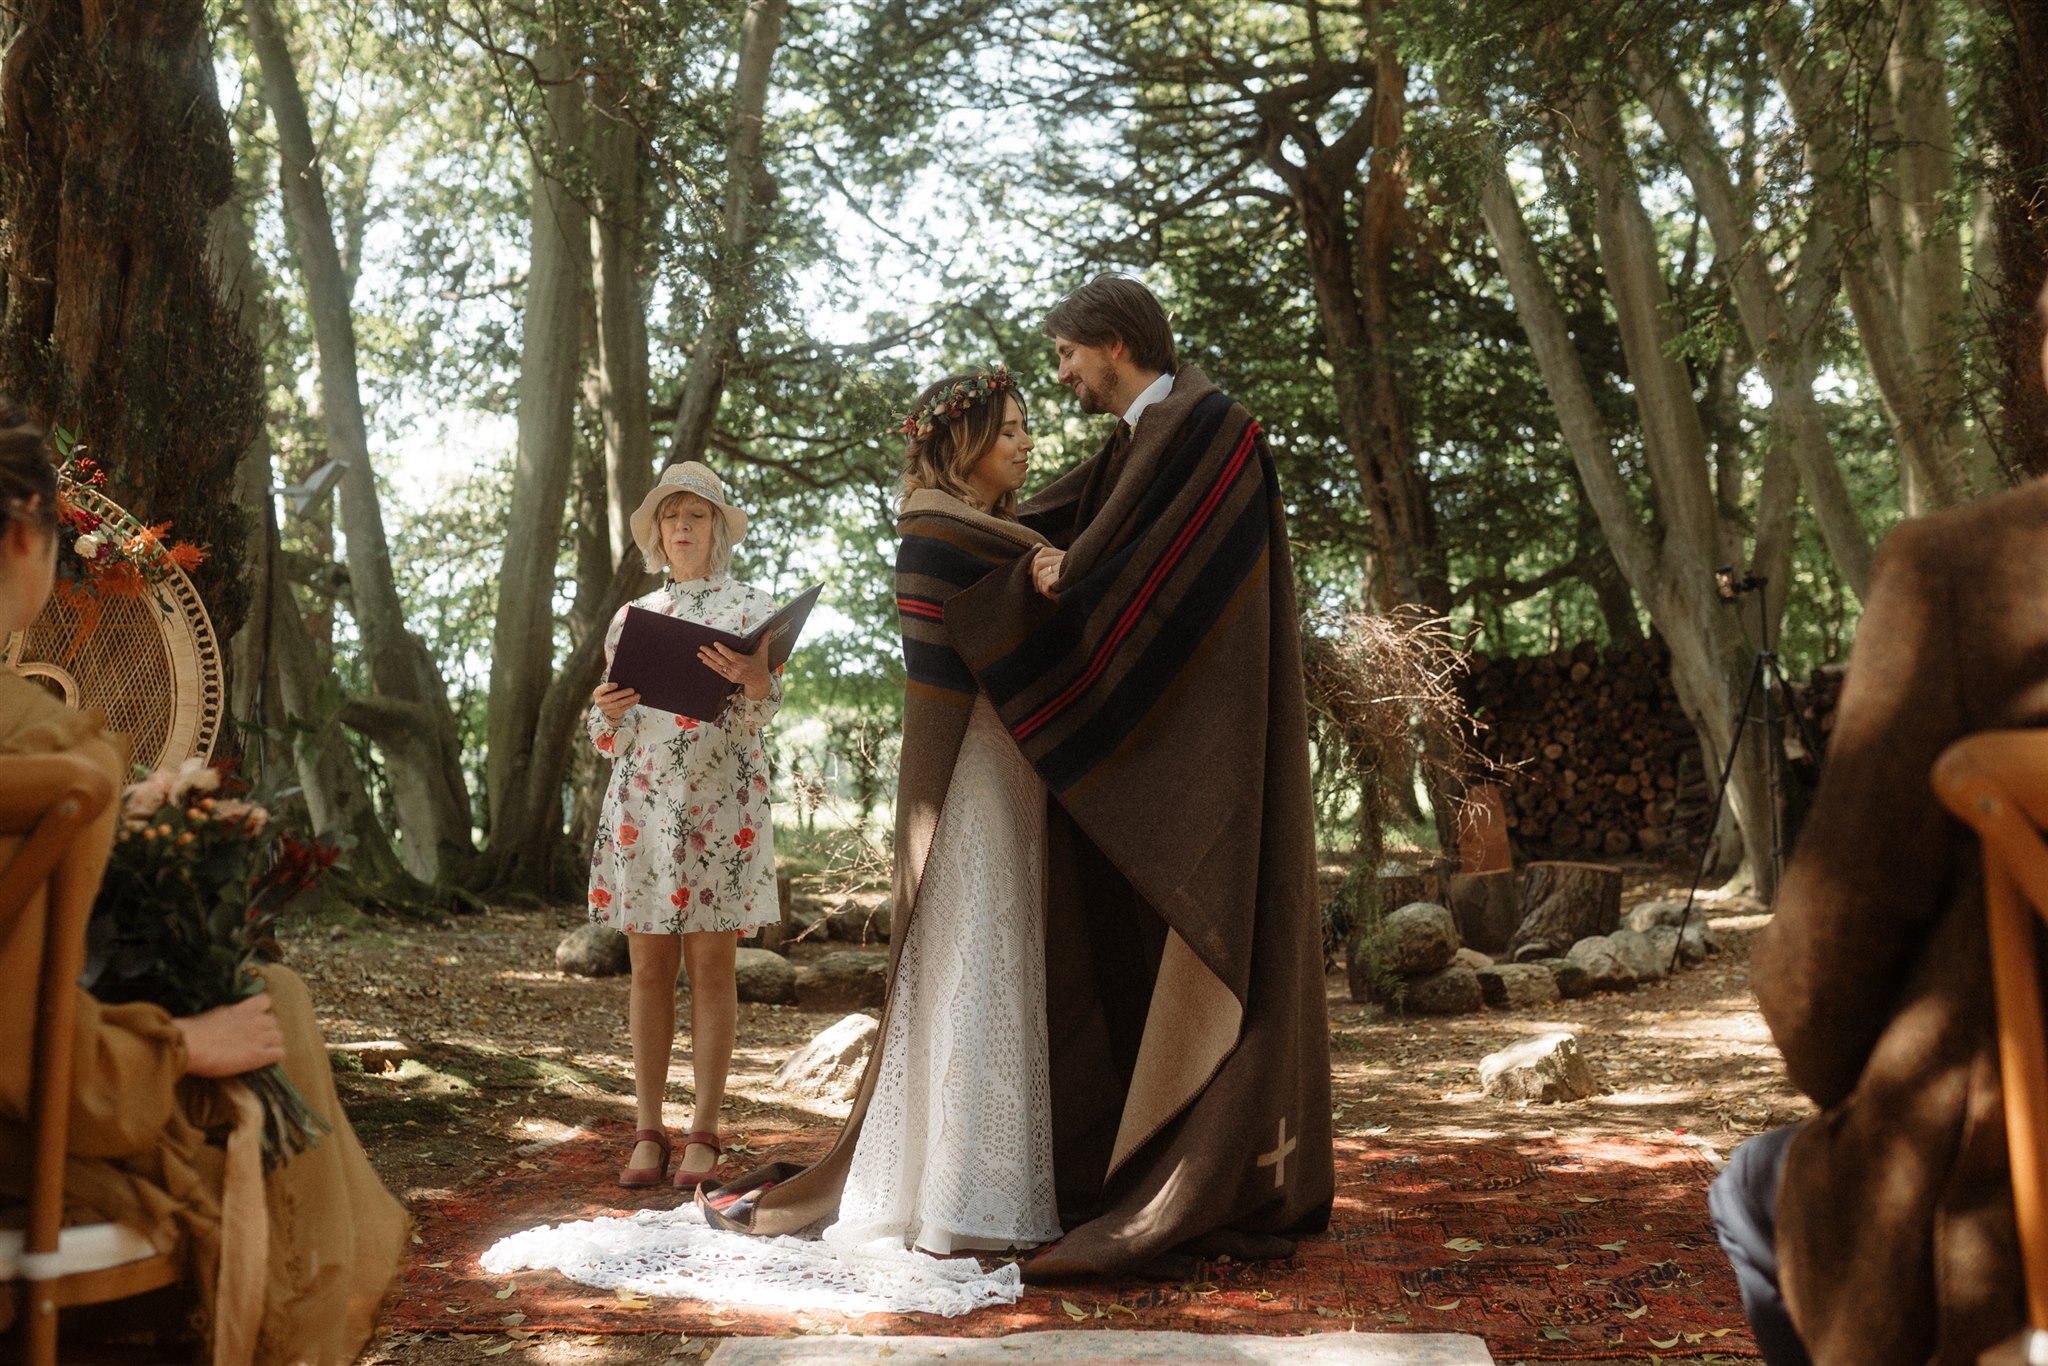 native american wedding traditions - native american blanket ceremony - woodland wedding ceremony - celebrant wedding ceremony